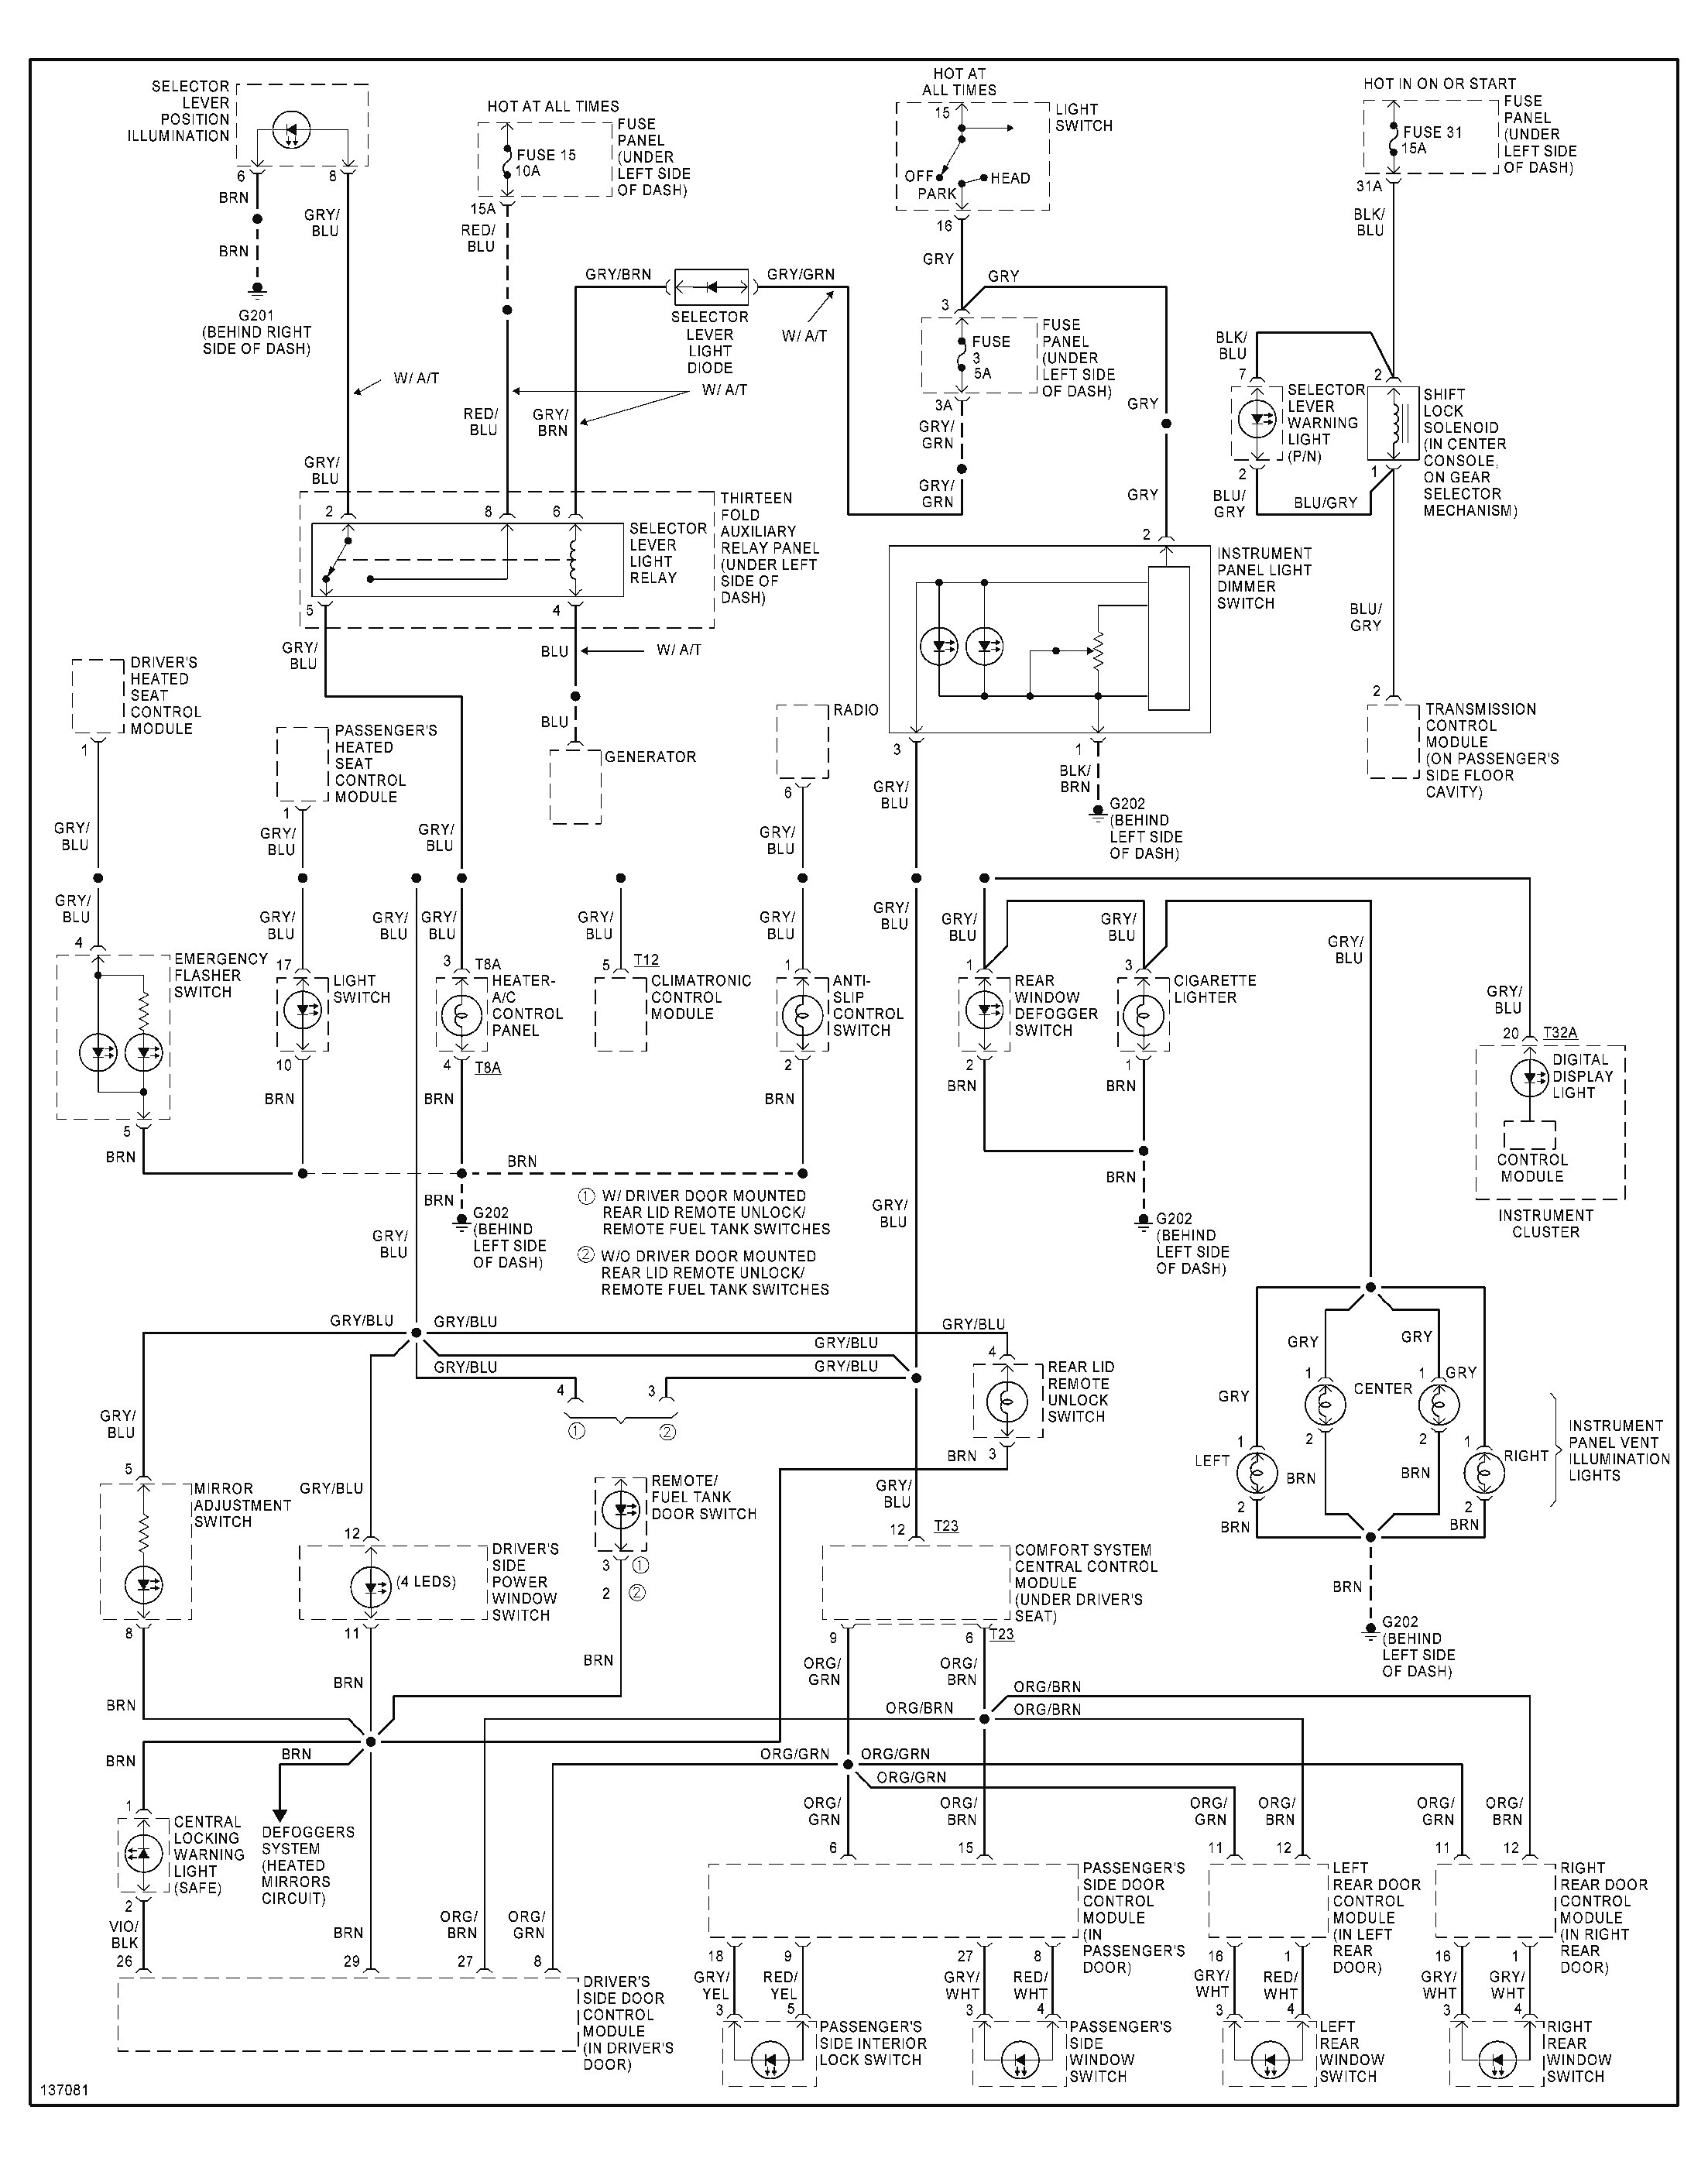 Diagram Sony Cdx Gt300 Wiring Diagram Full Version Hd Quality Wiring Diagram Armordiagram6 Sitiecommerceitalia It